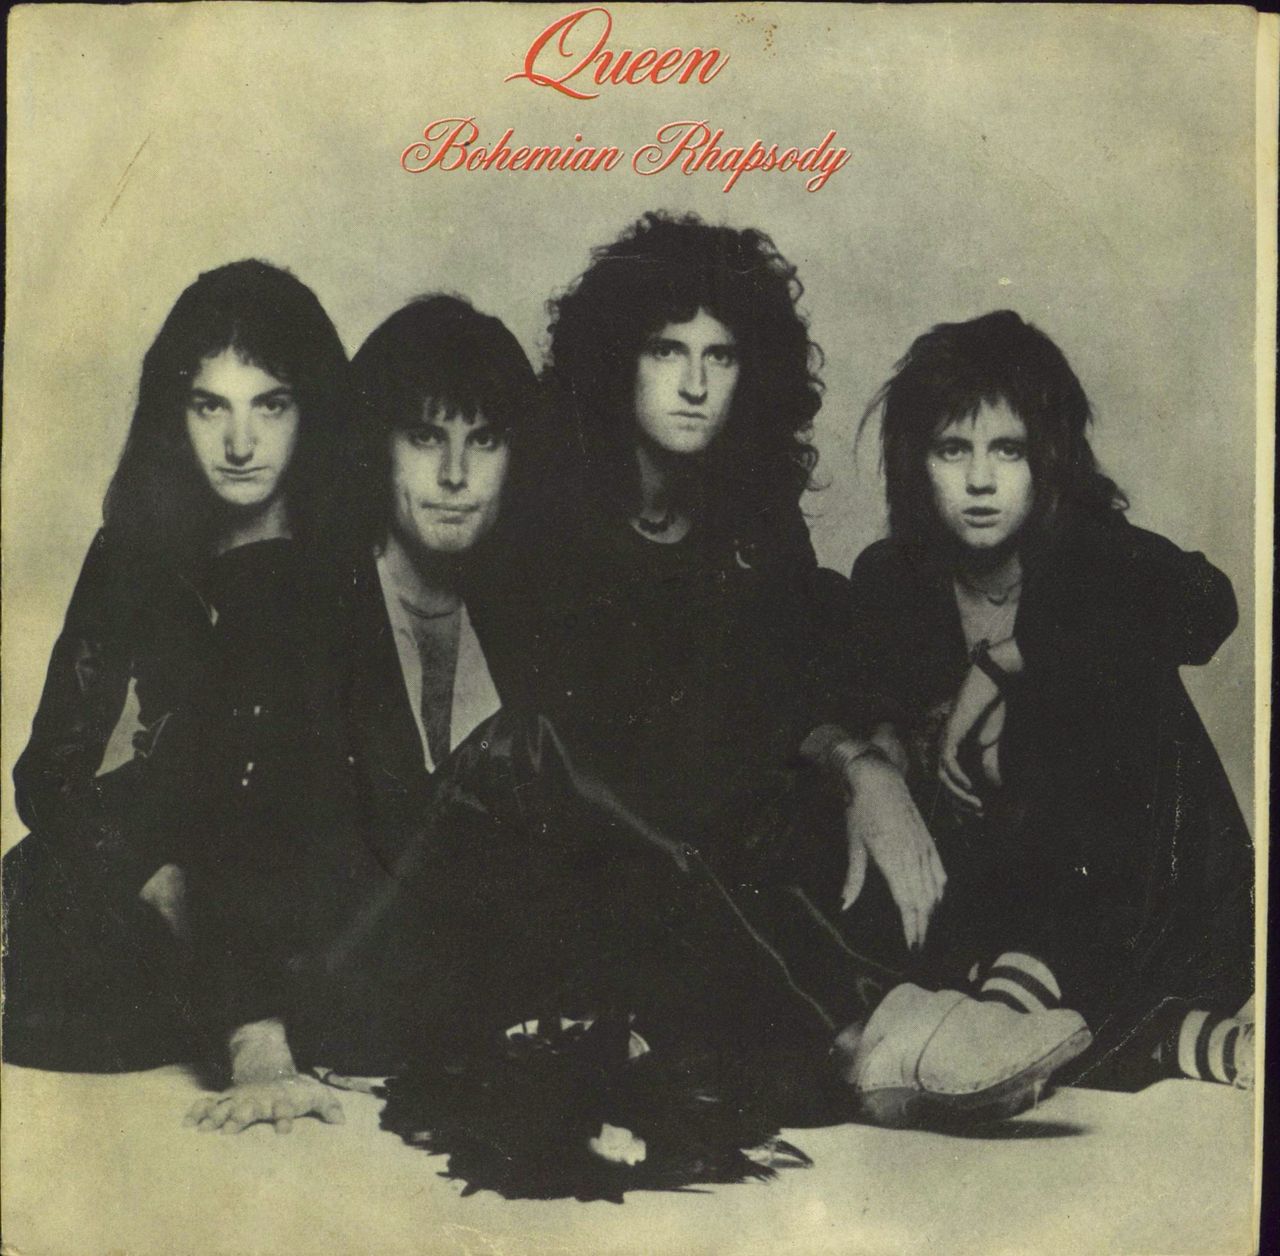 Produktionscenter smart Dwelling Queen Bohemian Rhapsody Yugoslavian 7" vinyl — RareVinyl.com